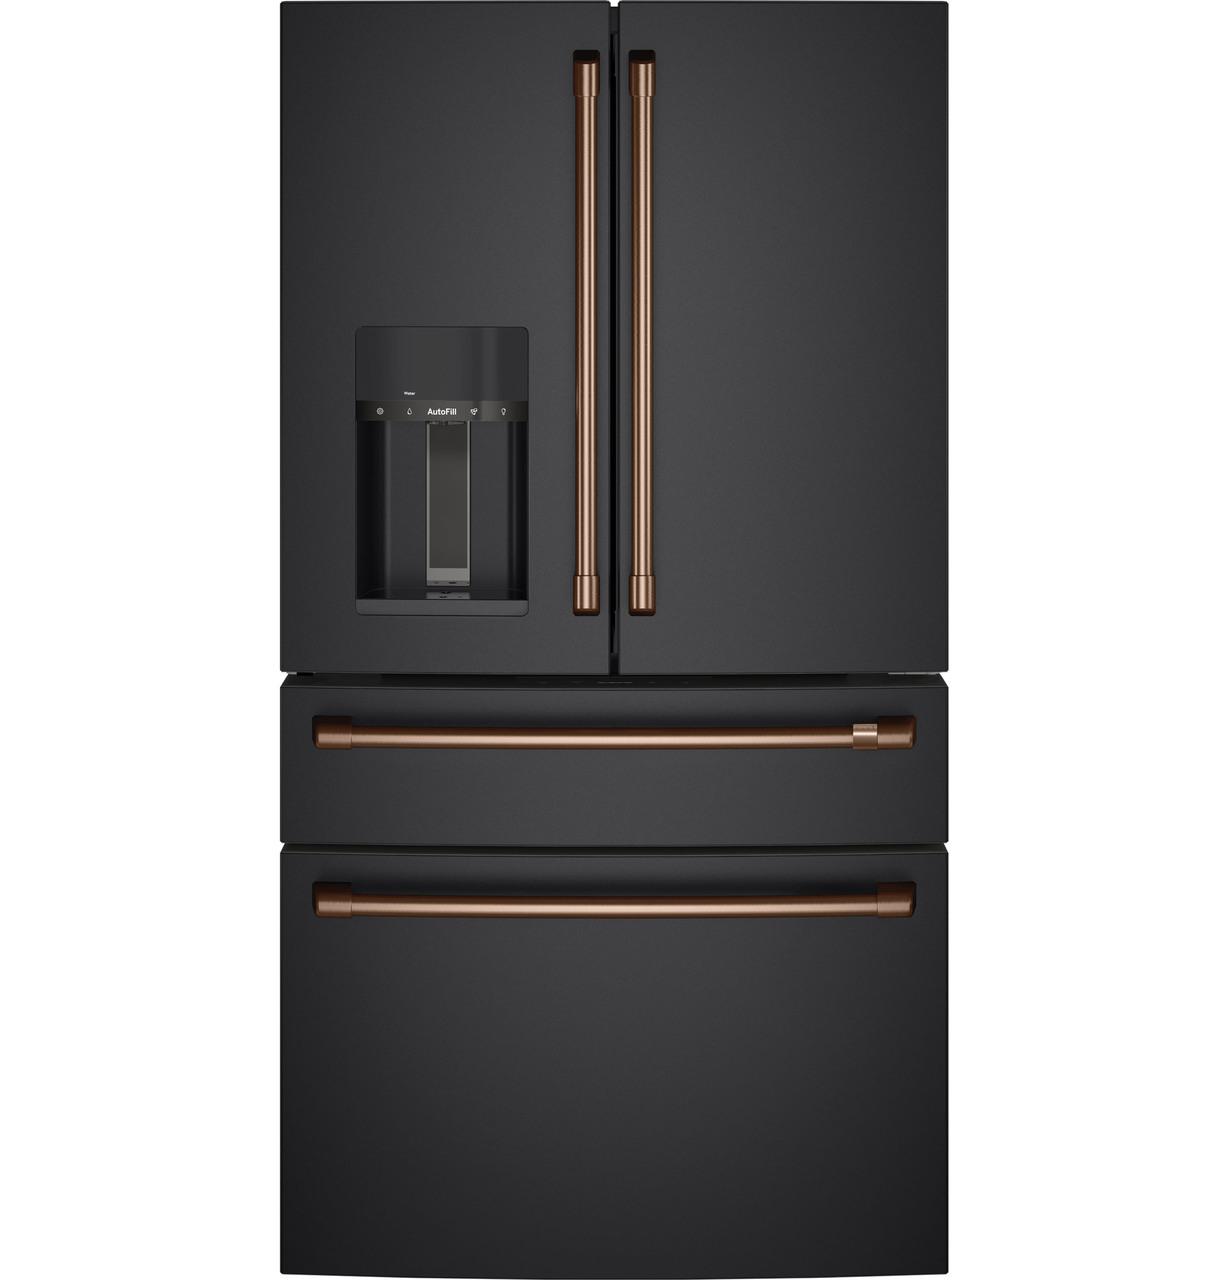 Cafe Caf(eback)™ ENERGY STAR® 27.8 Cu. Ft. Smart 4-Door French-Door Refrigerator